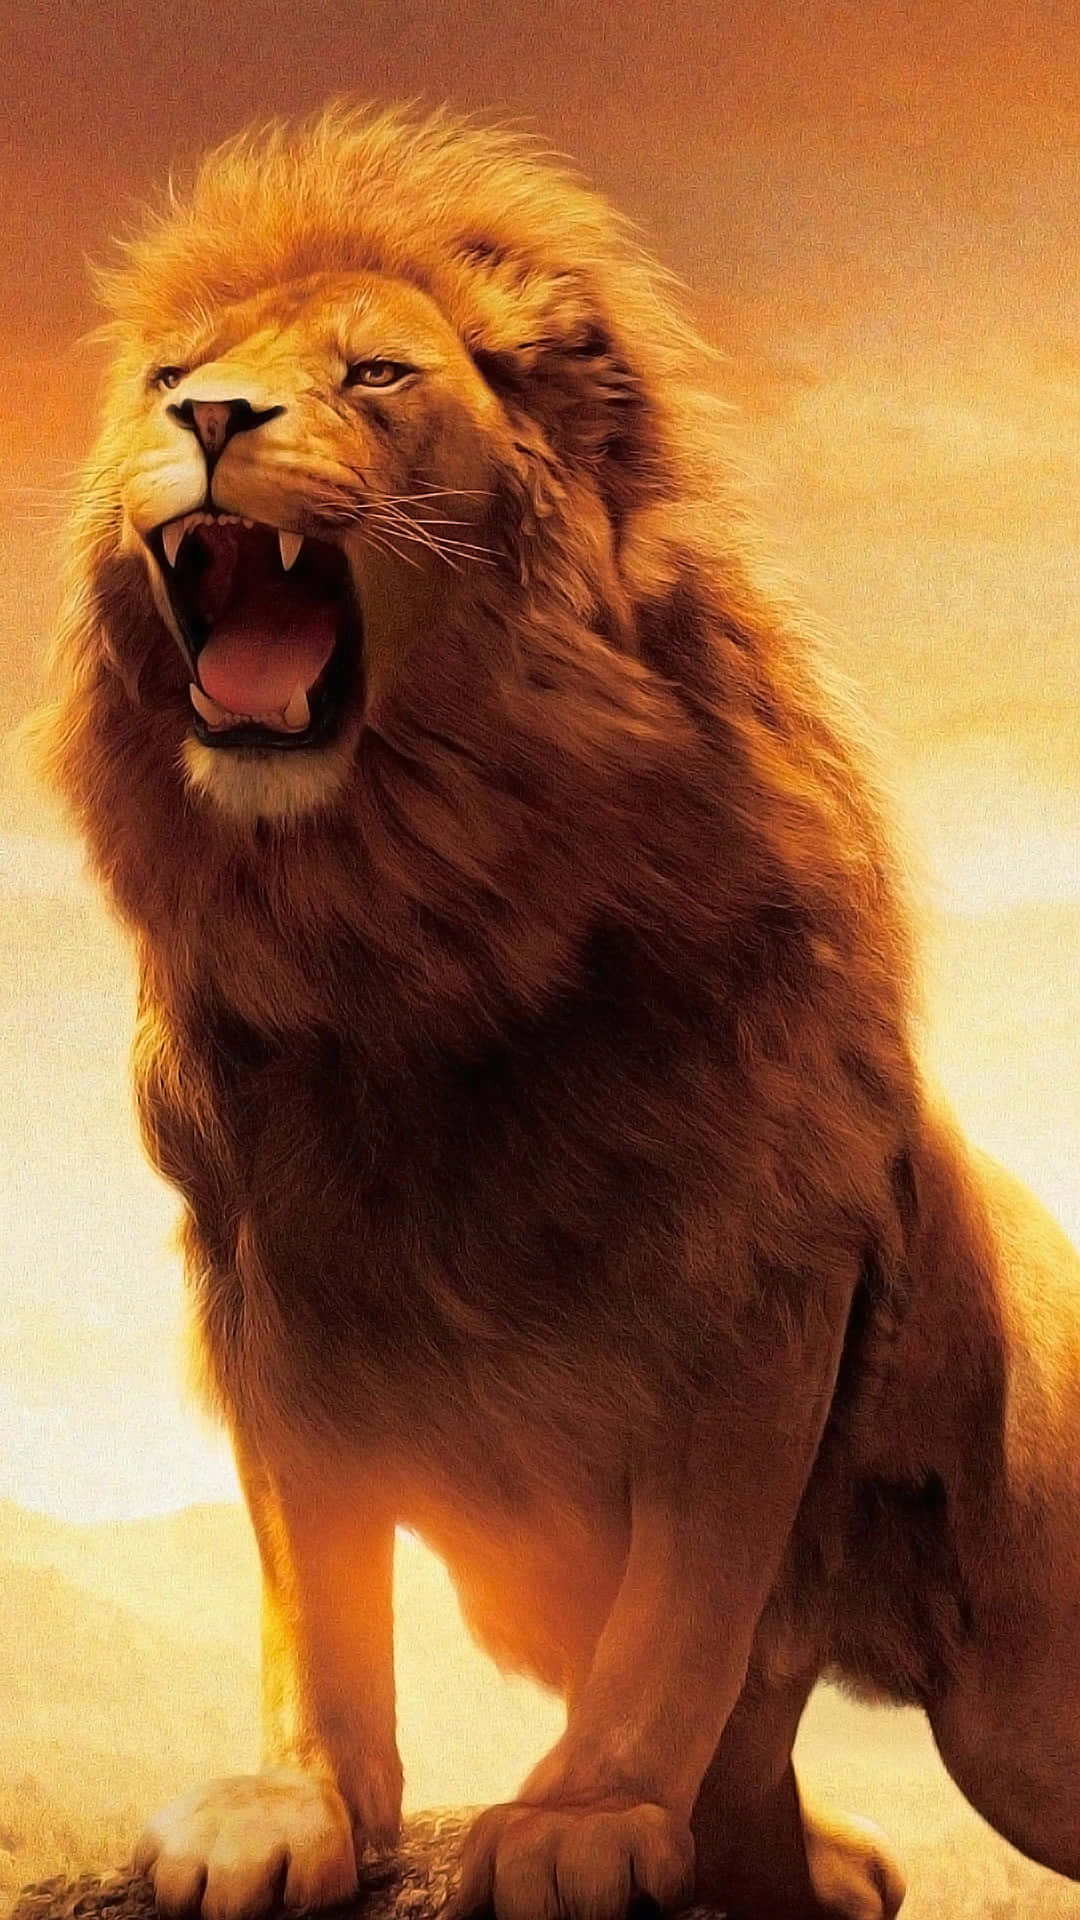 Roaring Lion In The Mountain Wallpaper